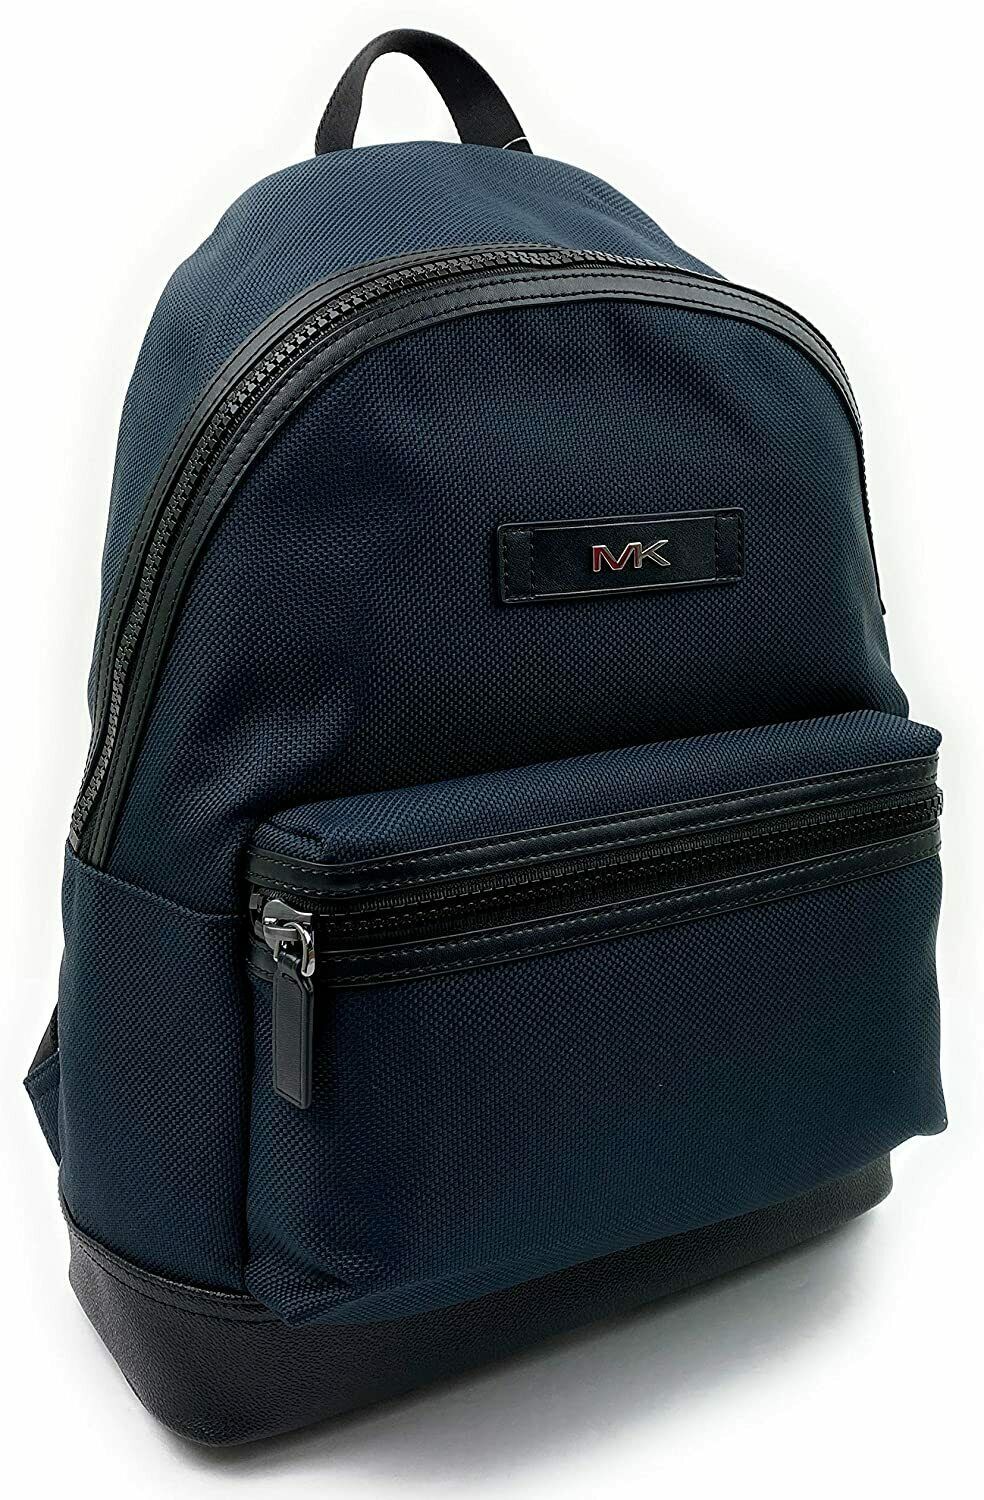 NWB Michael Kors Kent Sport Navy Blue Nylon Large Backpack 37F9LKSB2C Dust Bag